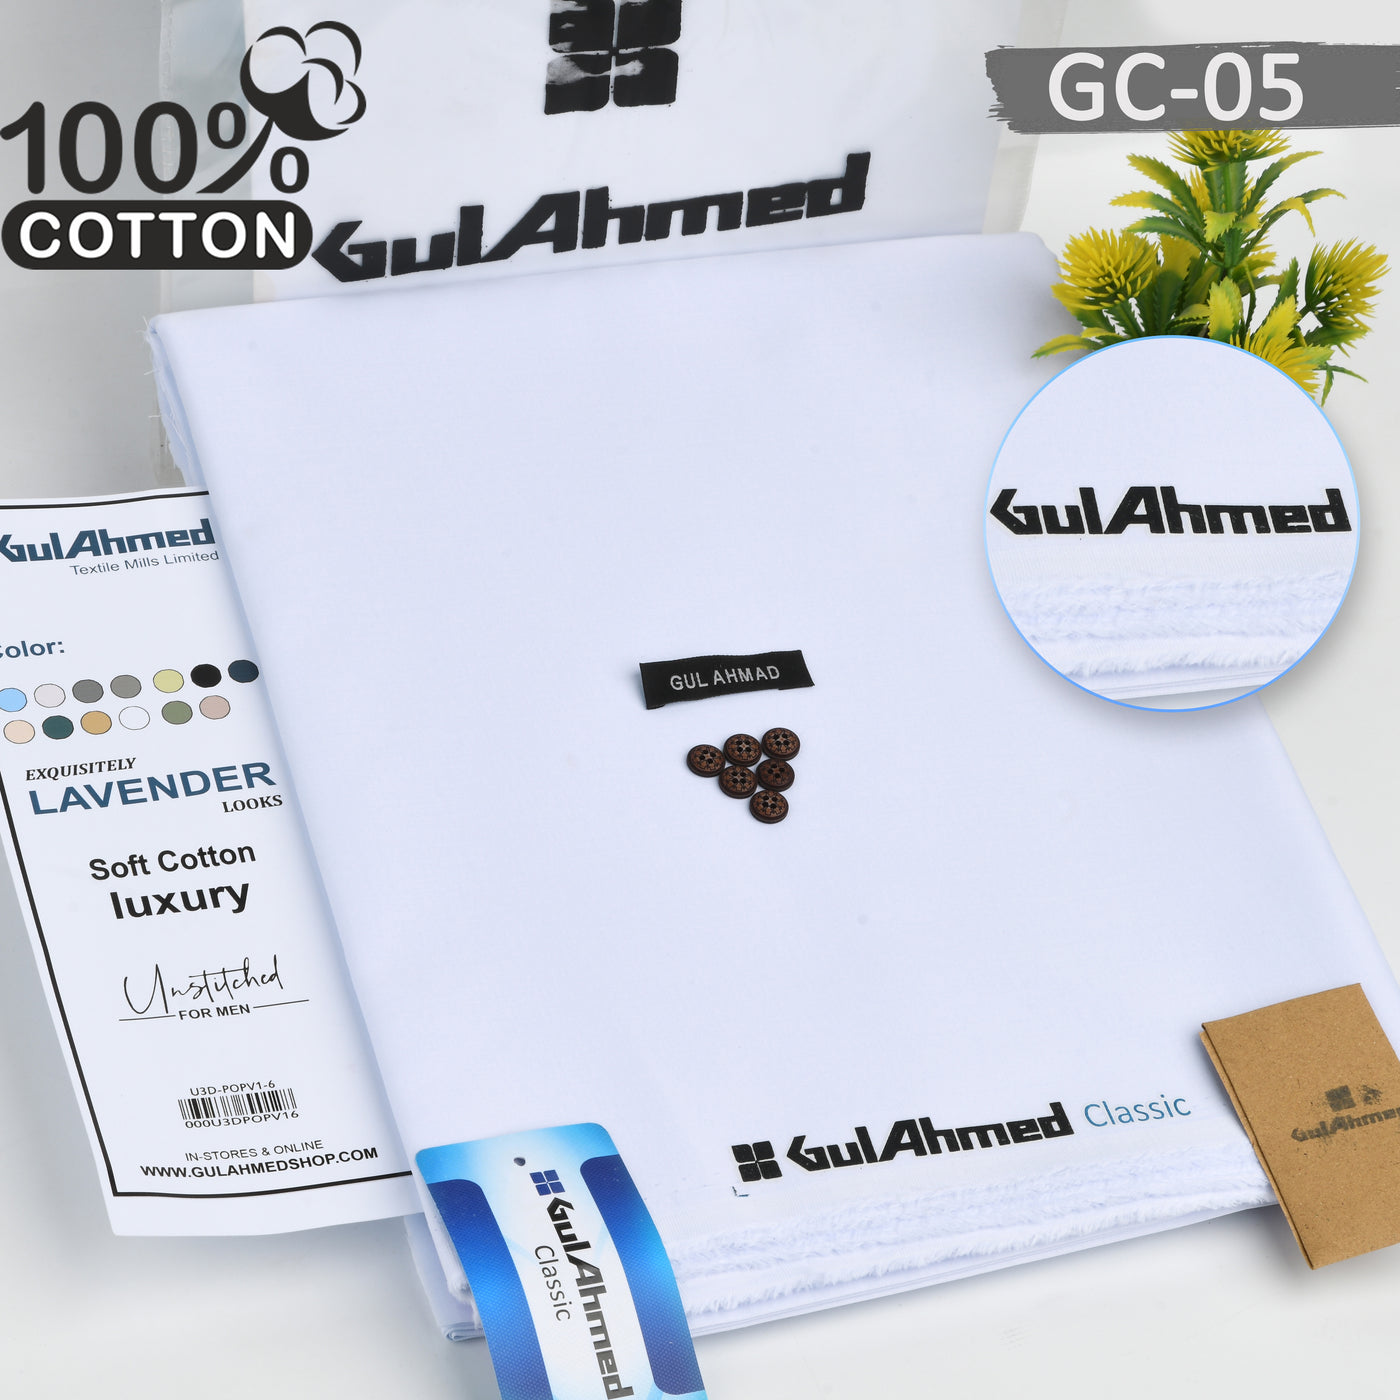 Gul Ahmed Cotton GC-05